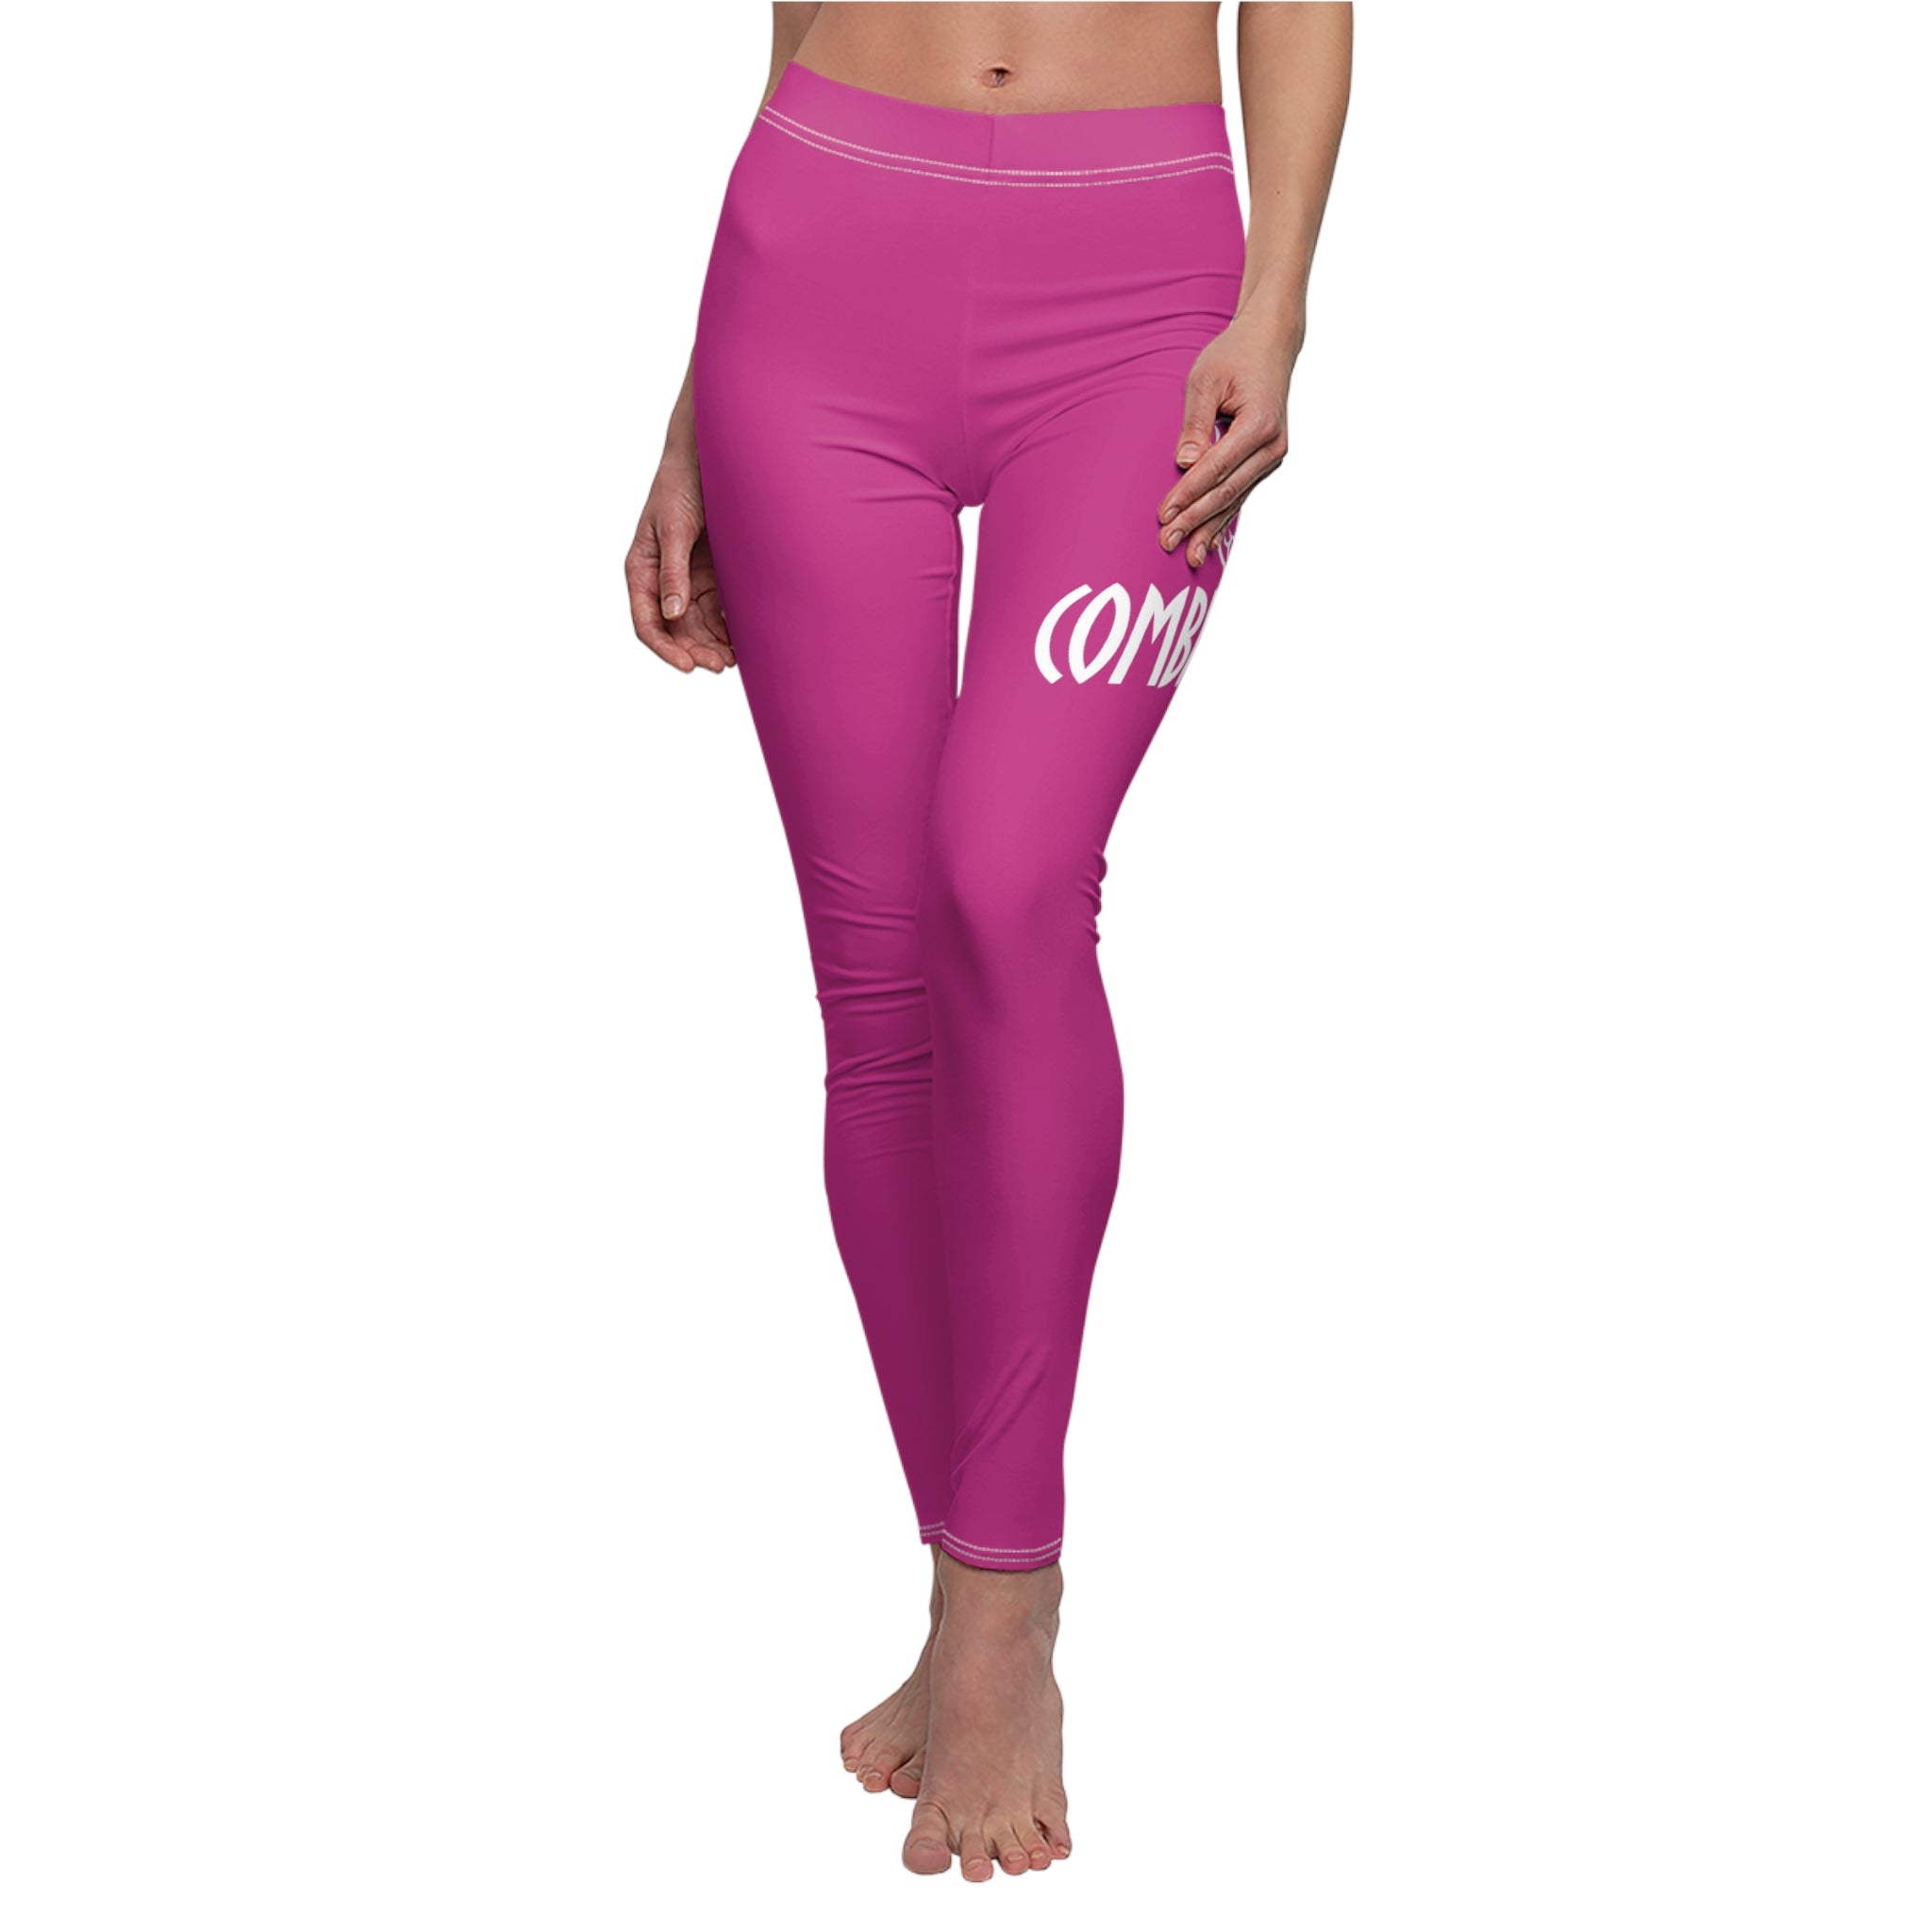 CombinedMinds Women's Cut & Sew Casual Leggings-Pink/White Logo